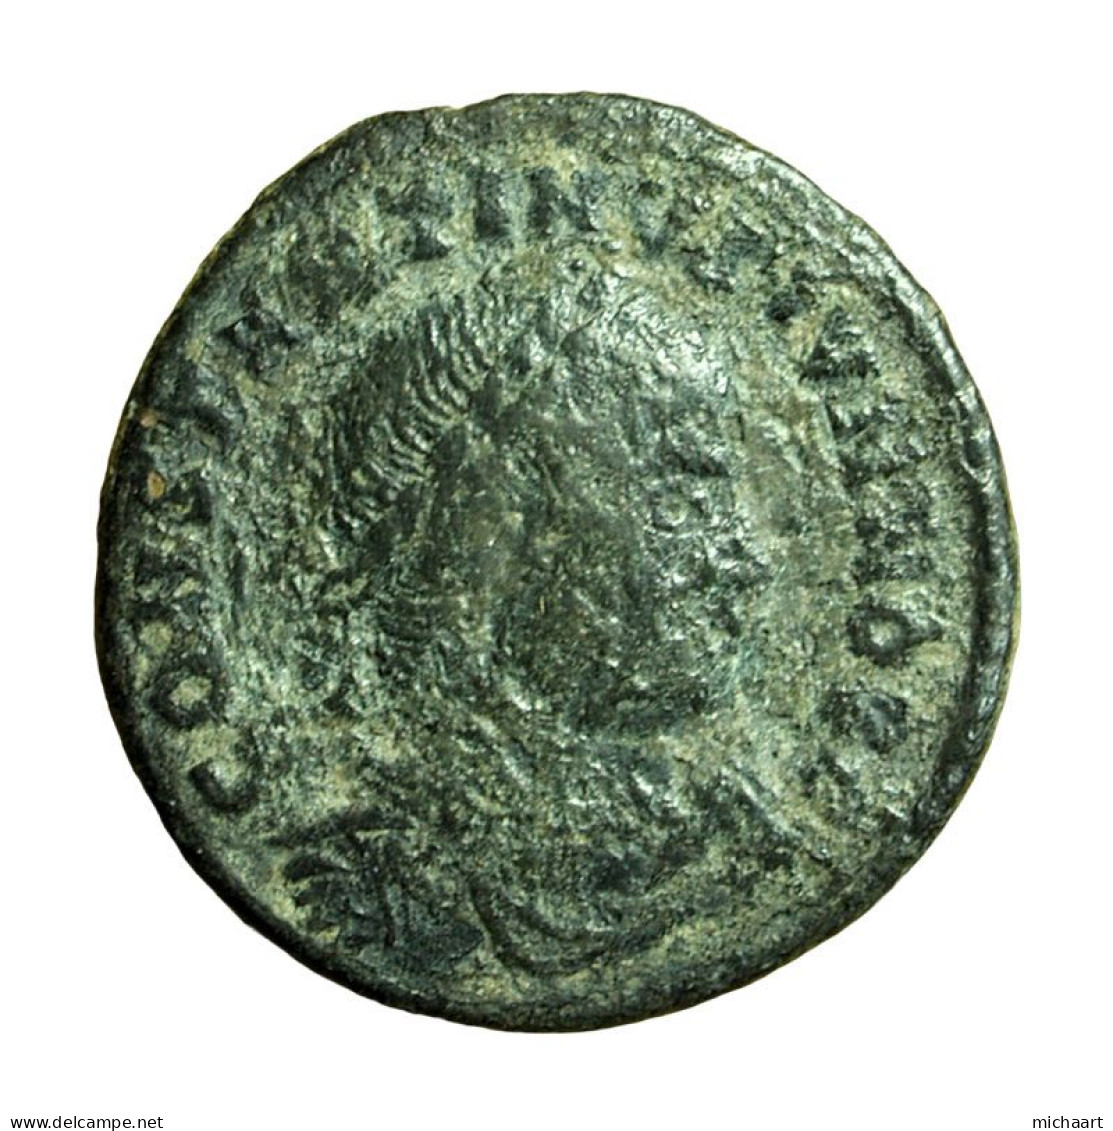 Roman Coin Constantine II Arles Follis AE18mm Bust / VOT X Wreath 04243 - L'Empire Chrétien (307 à 363)